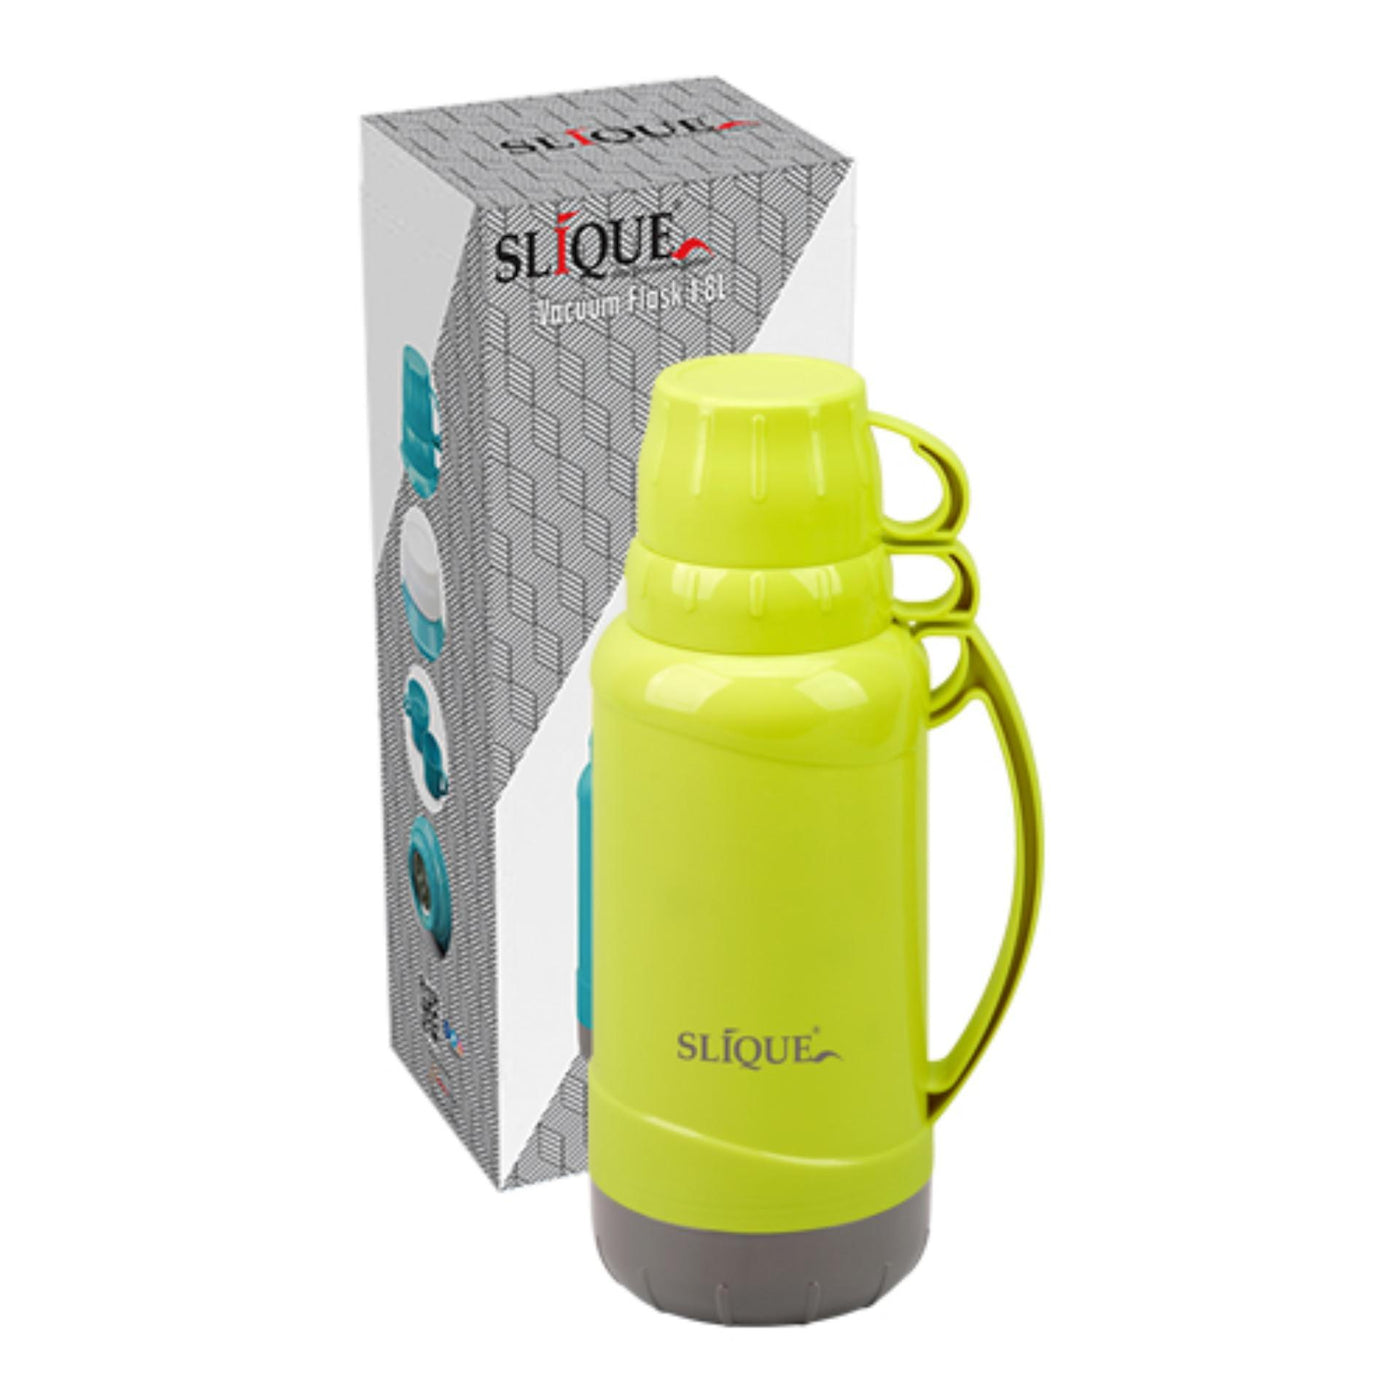 SLIQUE Premium Vacuum Flask w/ 2 Cups 1800ml Modern Italian Design Amazing Gift Idea For Any Occasion! (Green)